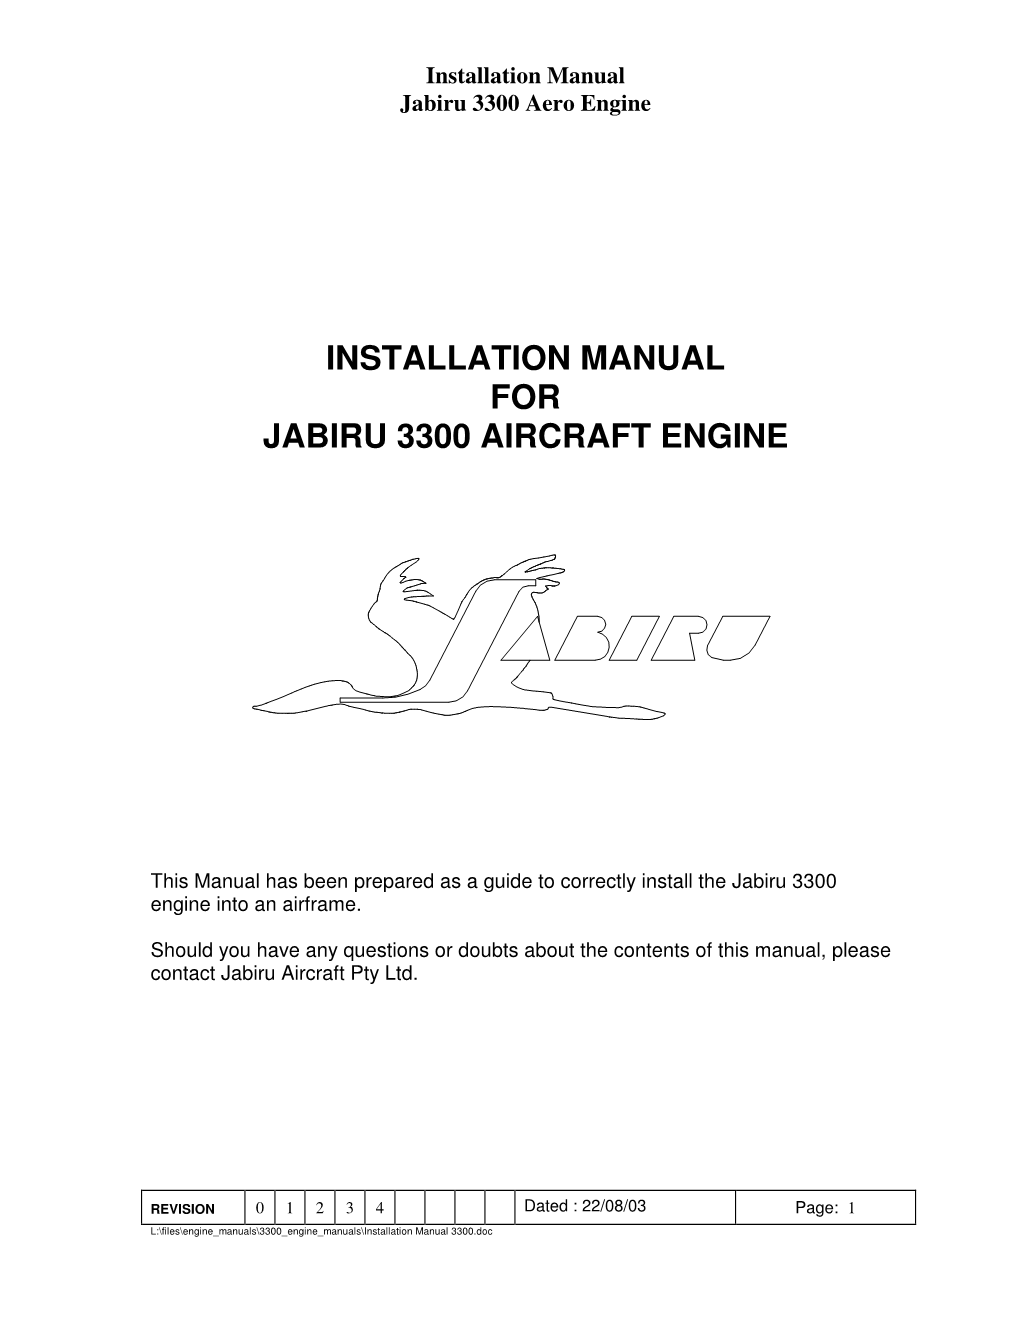 Installation Manual for Jabiru 3300 Aircraft Engine